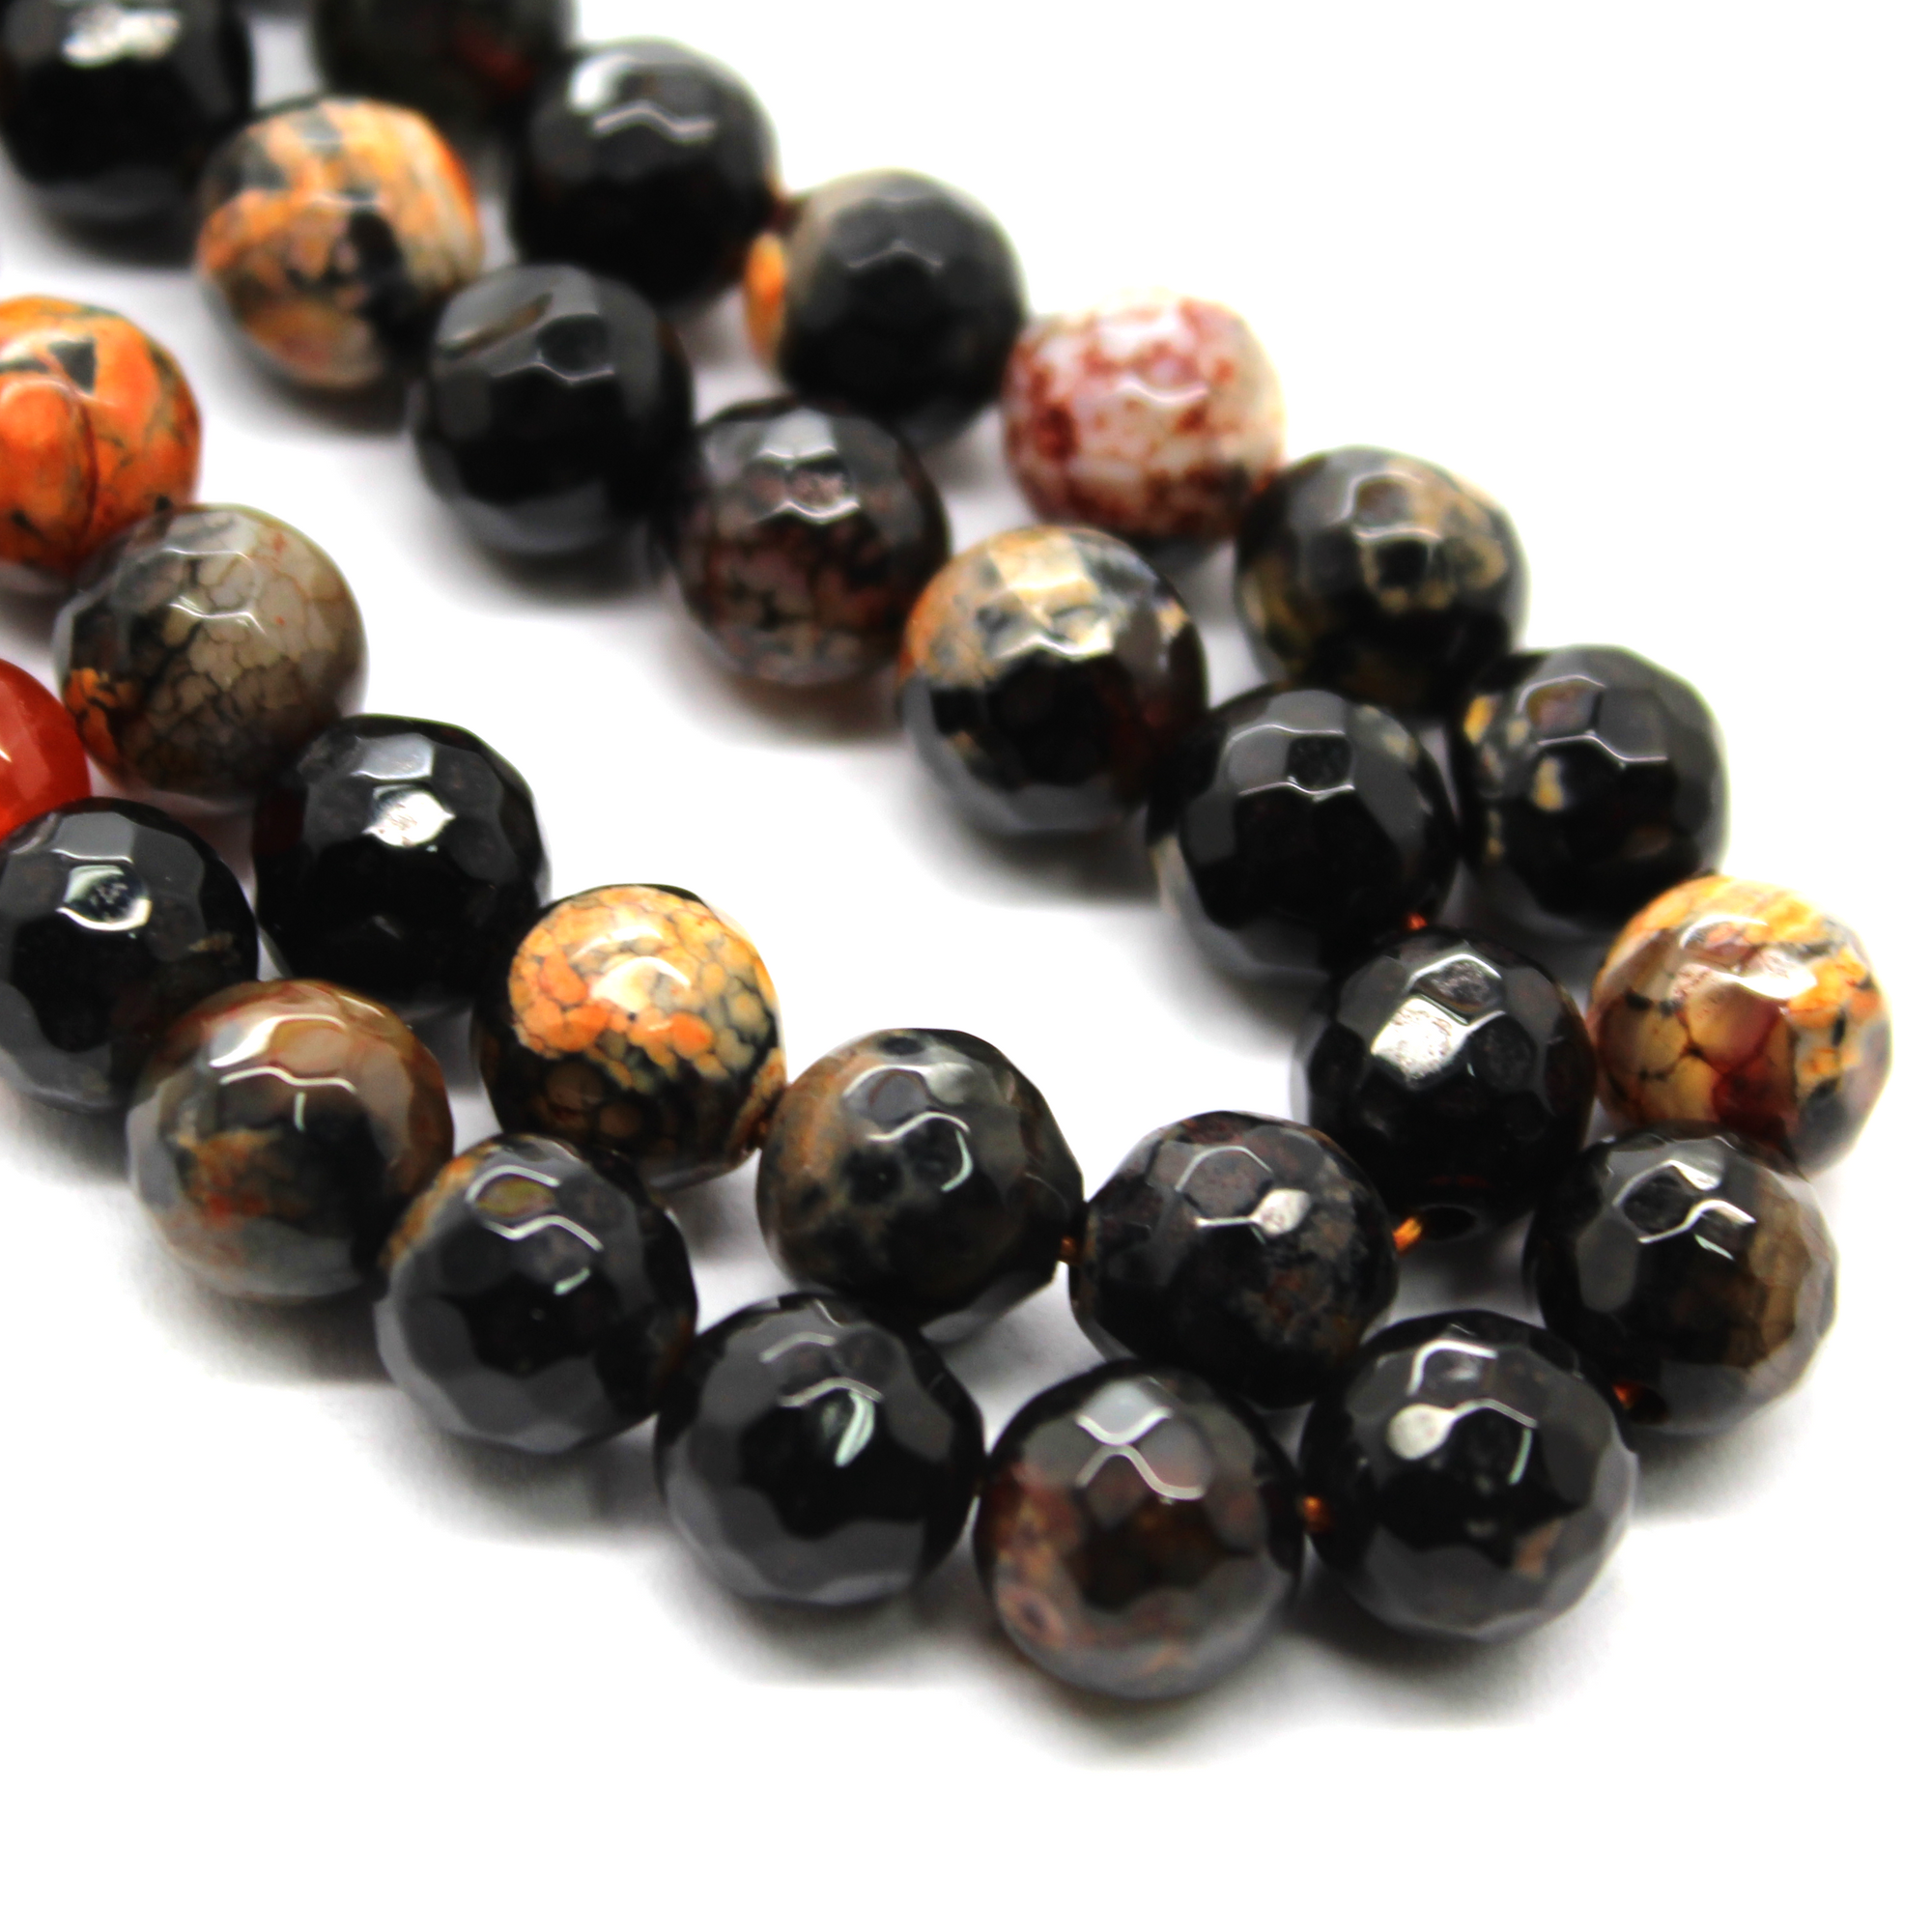 Agate Faceted - Black/Orange, Semi-Precious Stone, 8mm, 45 pcs per strand - Butterfly Beads